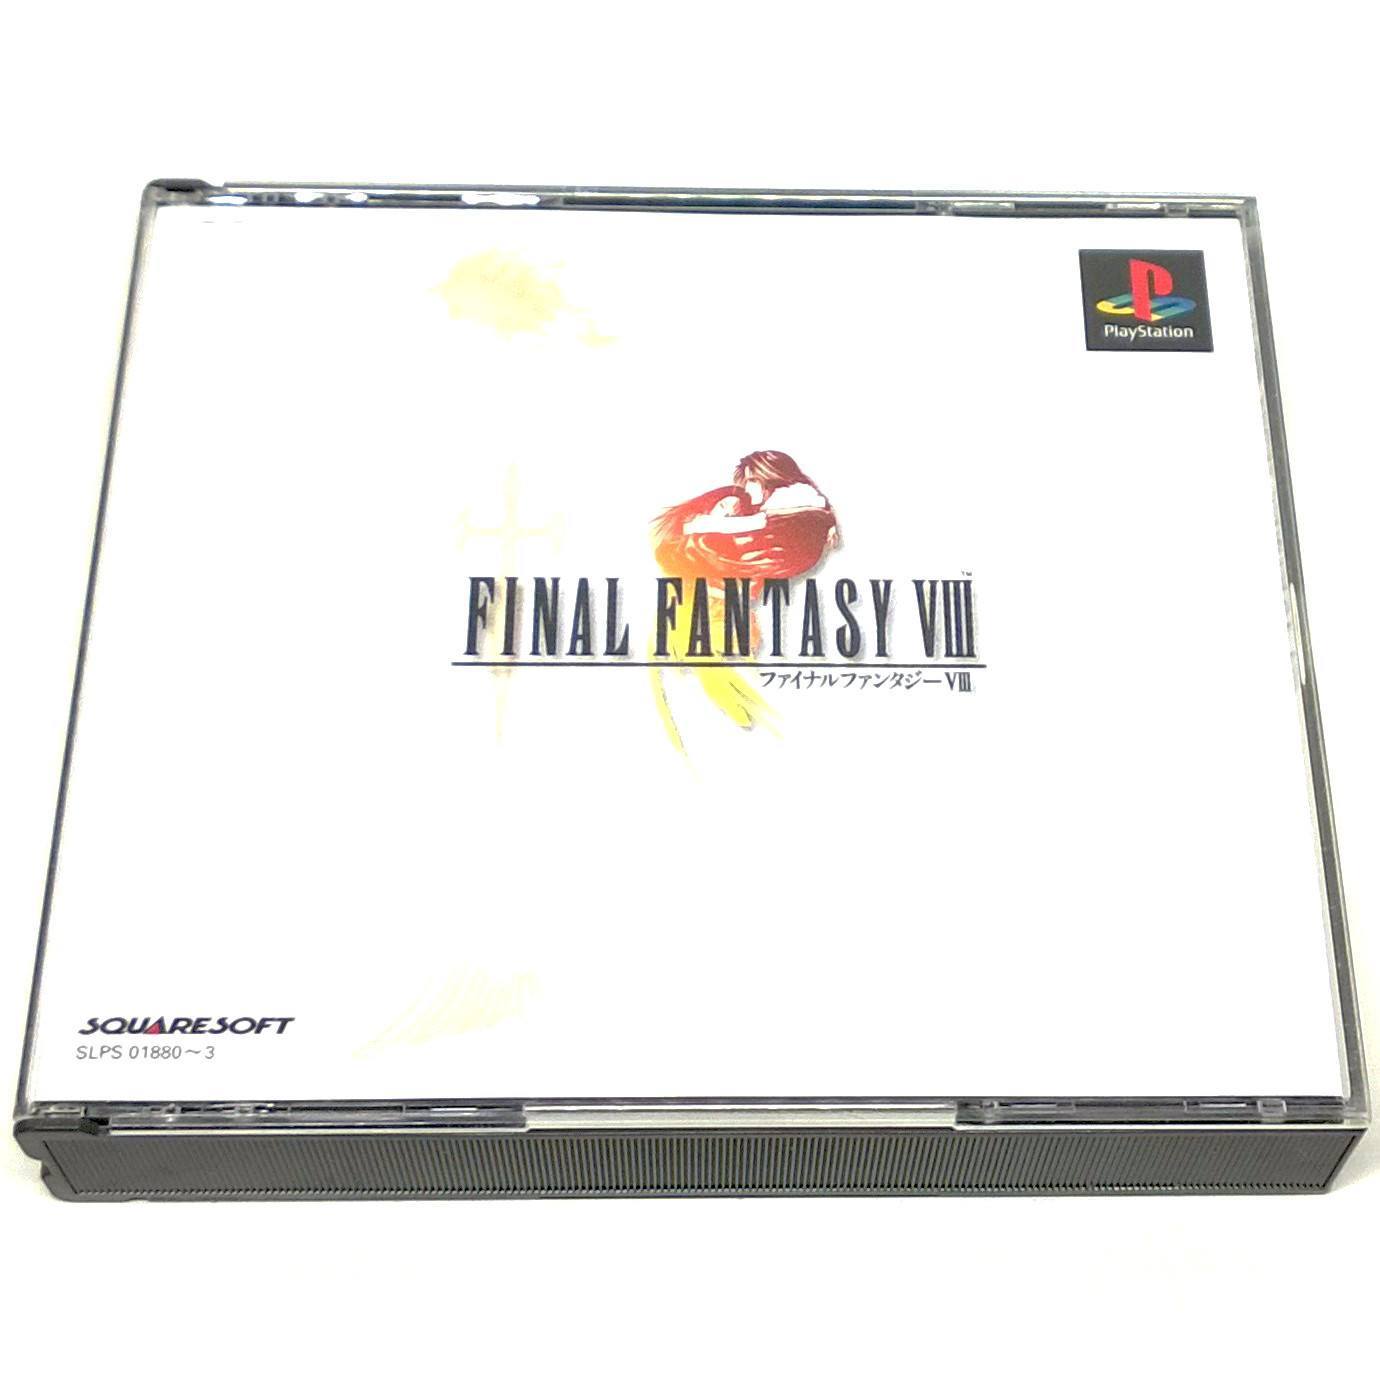 Final Fantasy VIII for PlayStation (import) - Front of case